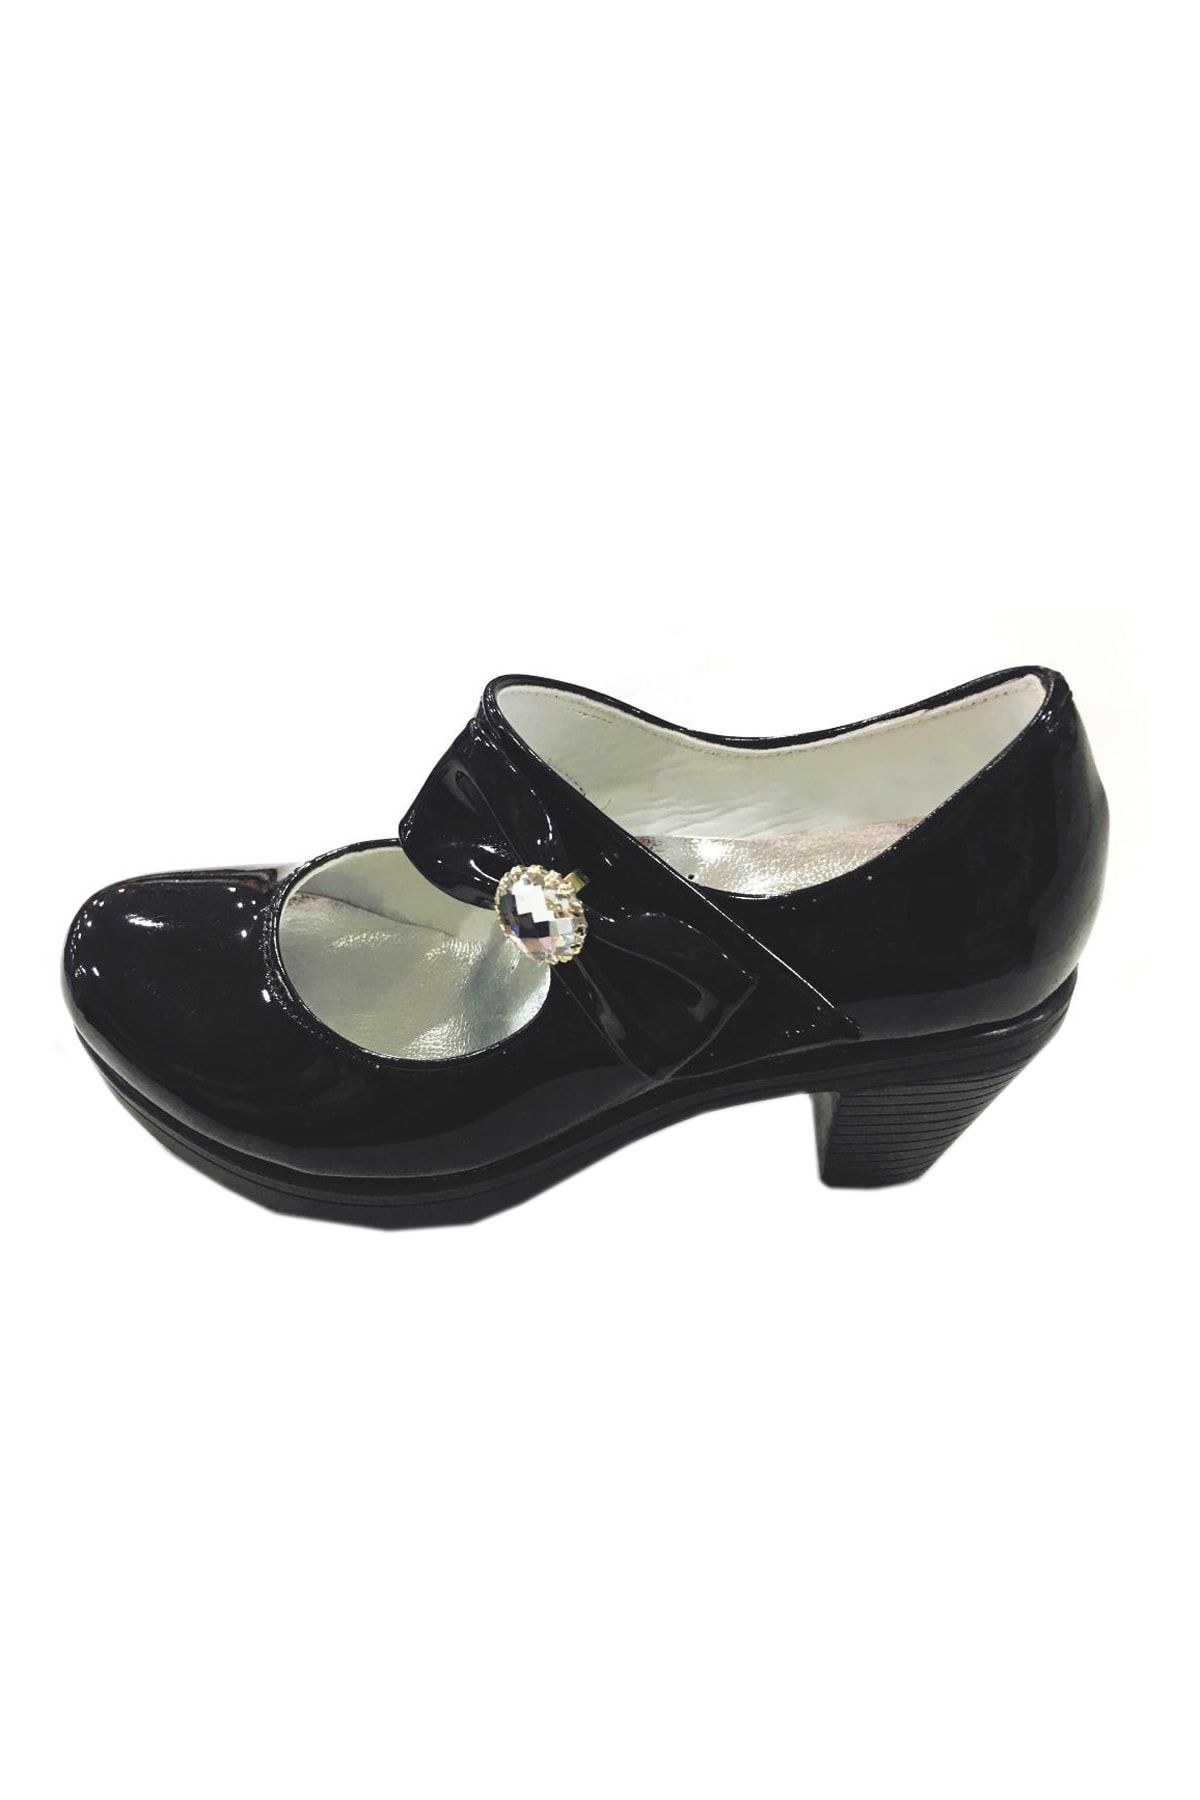 Afacan Kız Çocuk Siyah Rugan Topuklu Balo Abiye Ayakkabı, 27-36 Numara